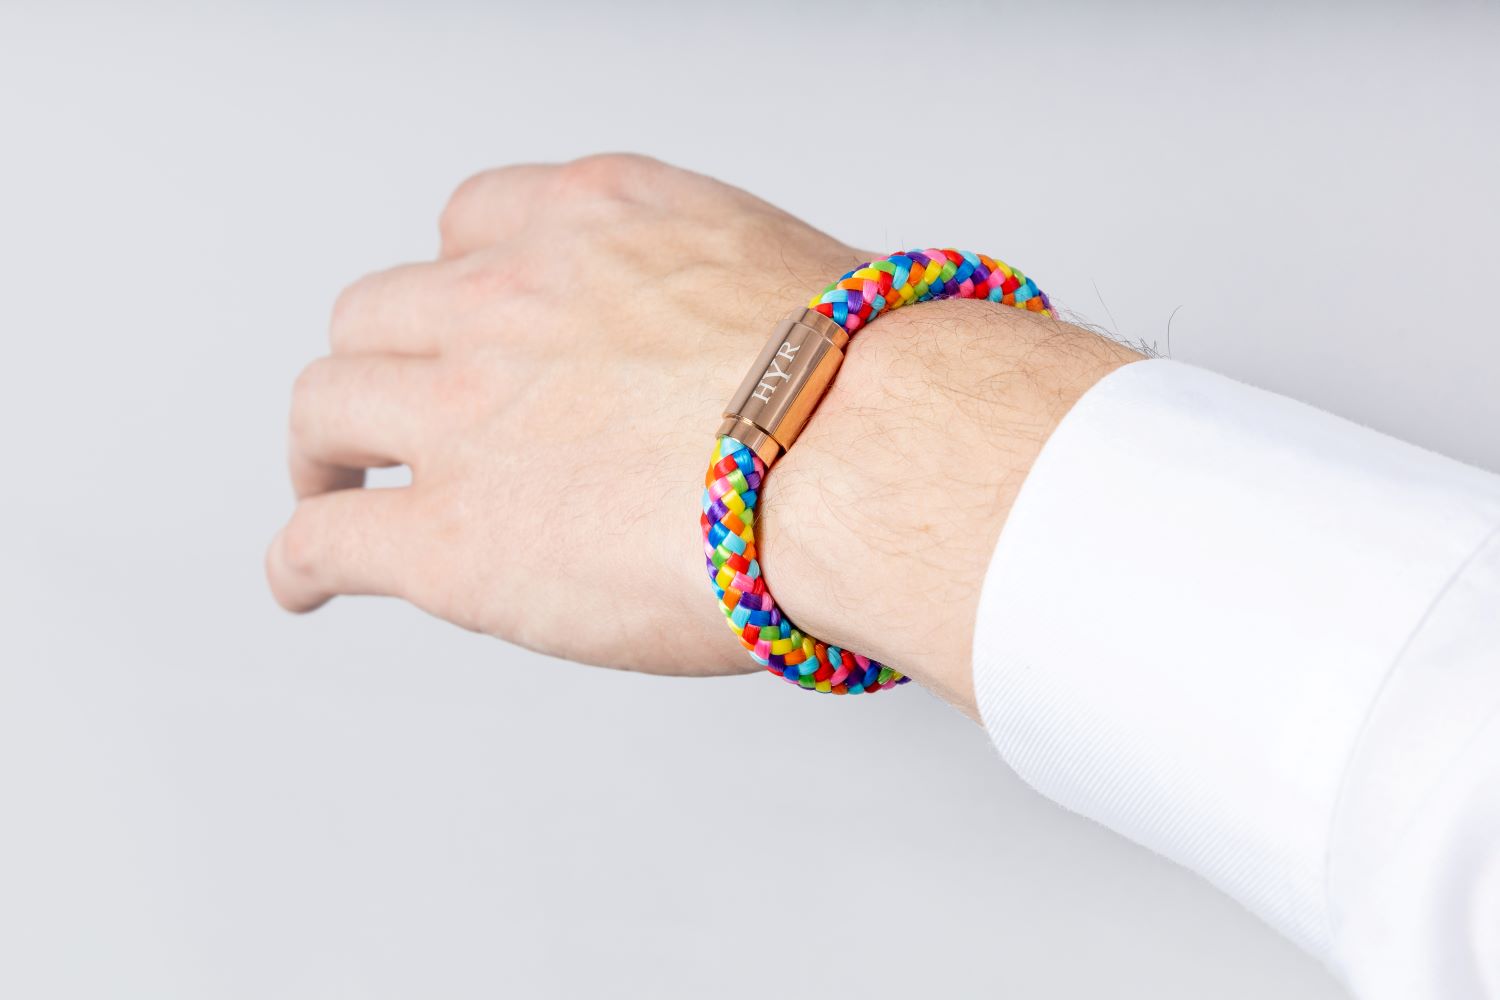 Rainbow dream rope bracelet - rose gold